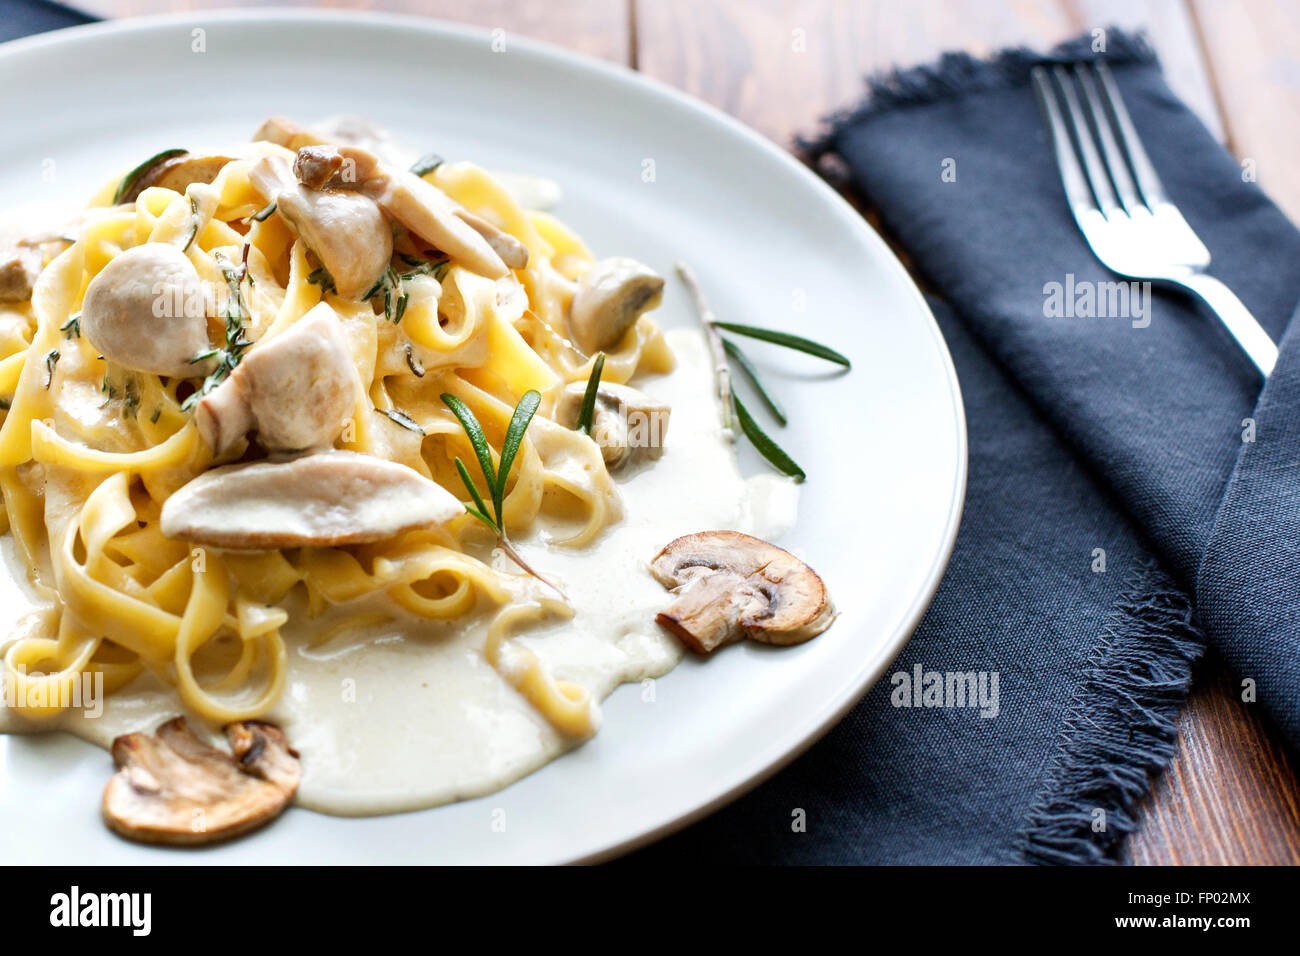 Tagliatelle vegetarian Pasta Dish with Mushrooms - Stock image Stock Photo